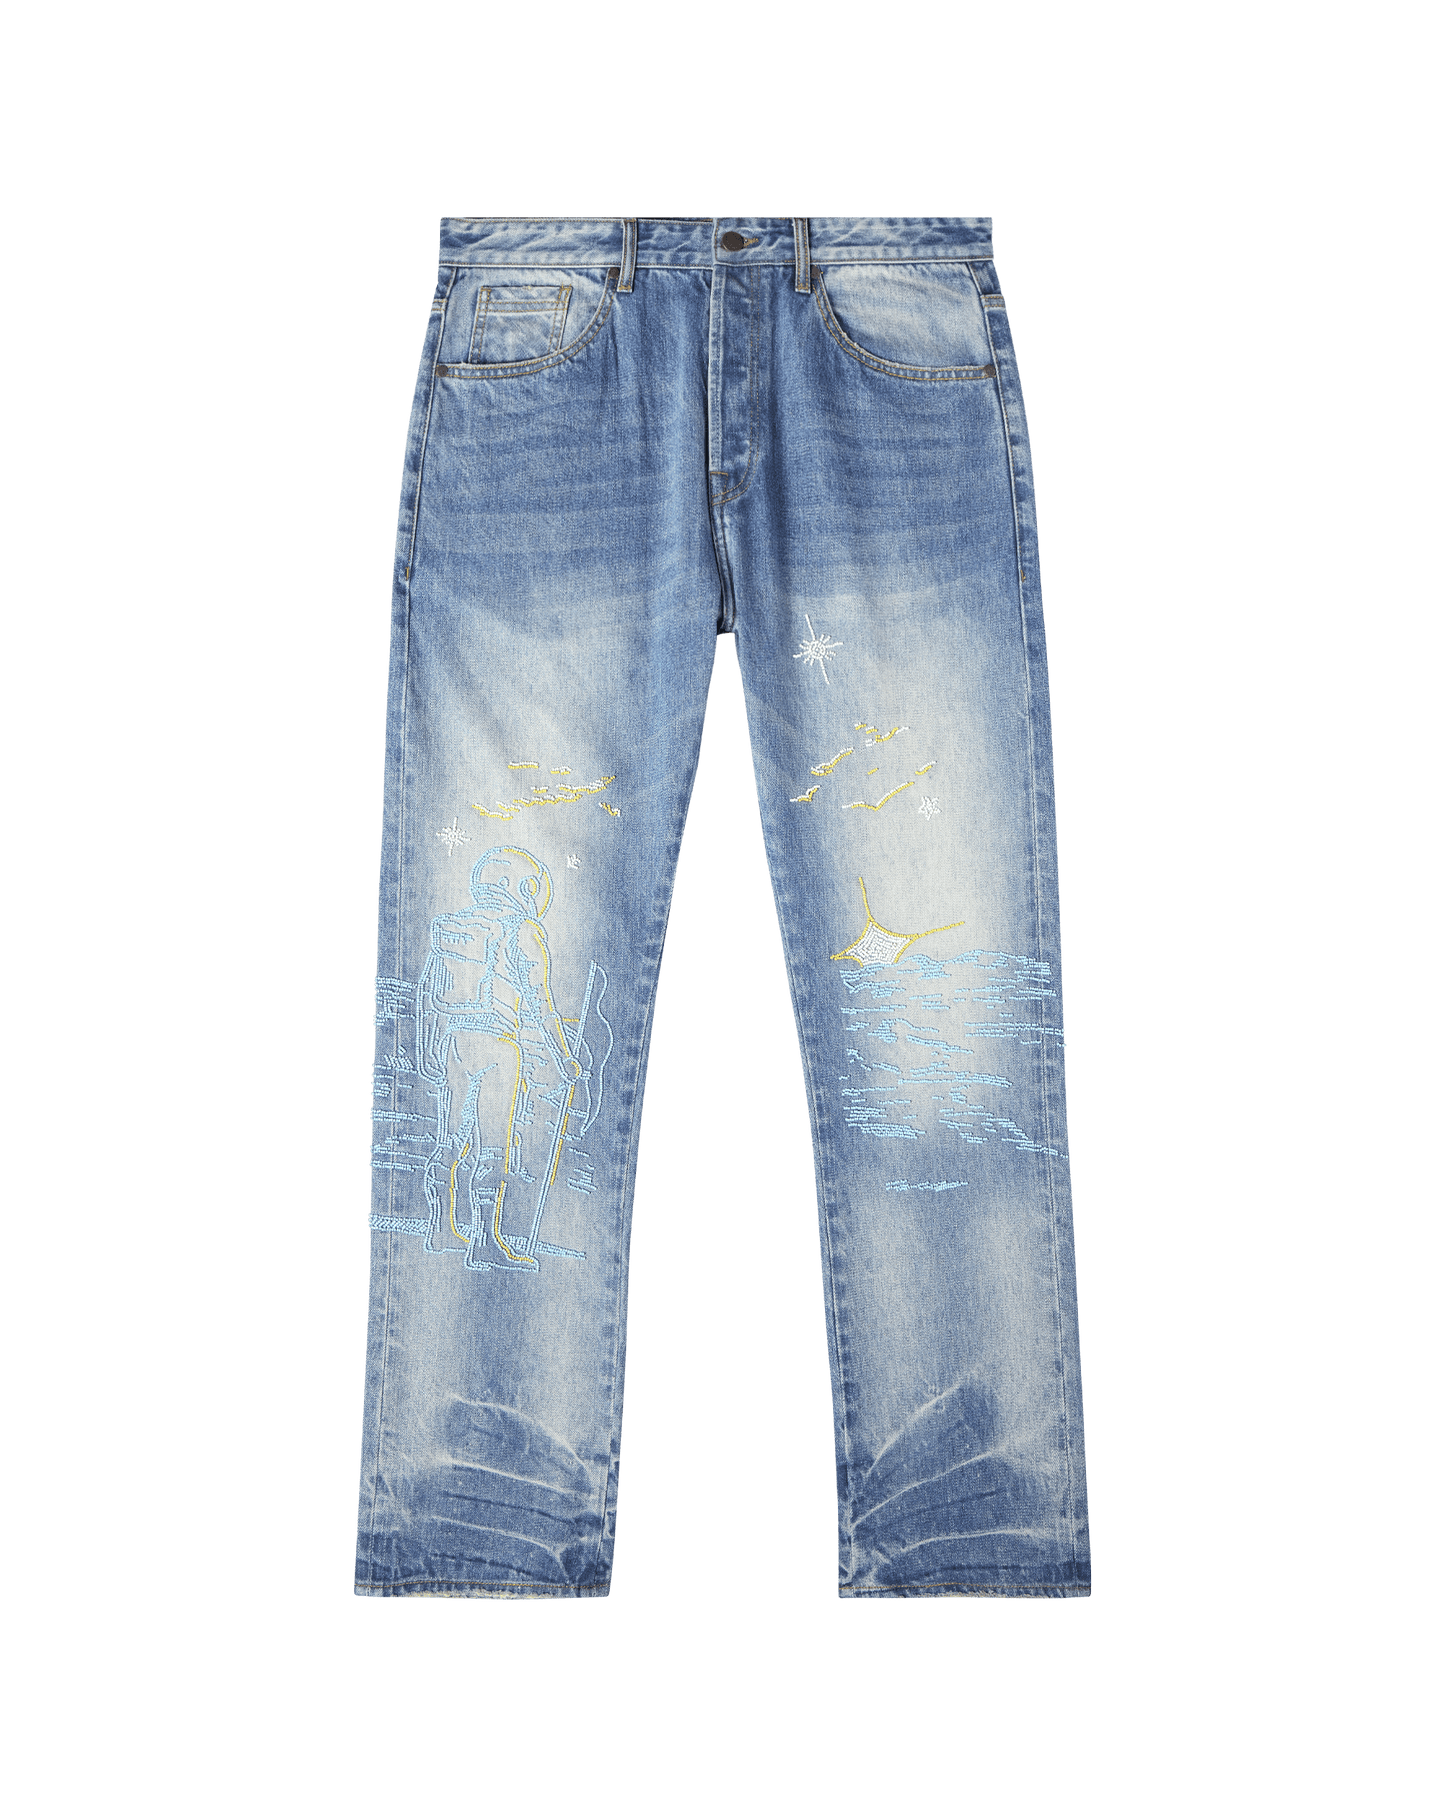 Starcrossed Jeans - Billionaire Boys Club